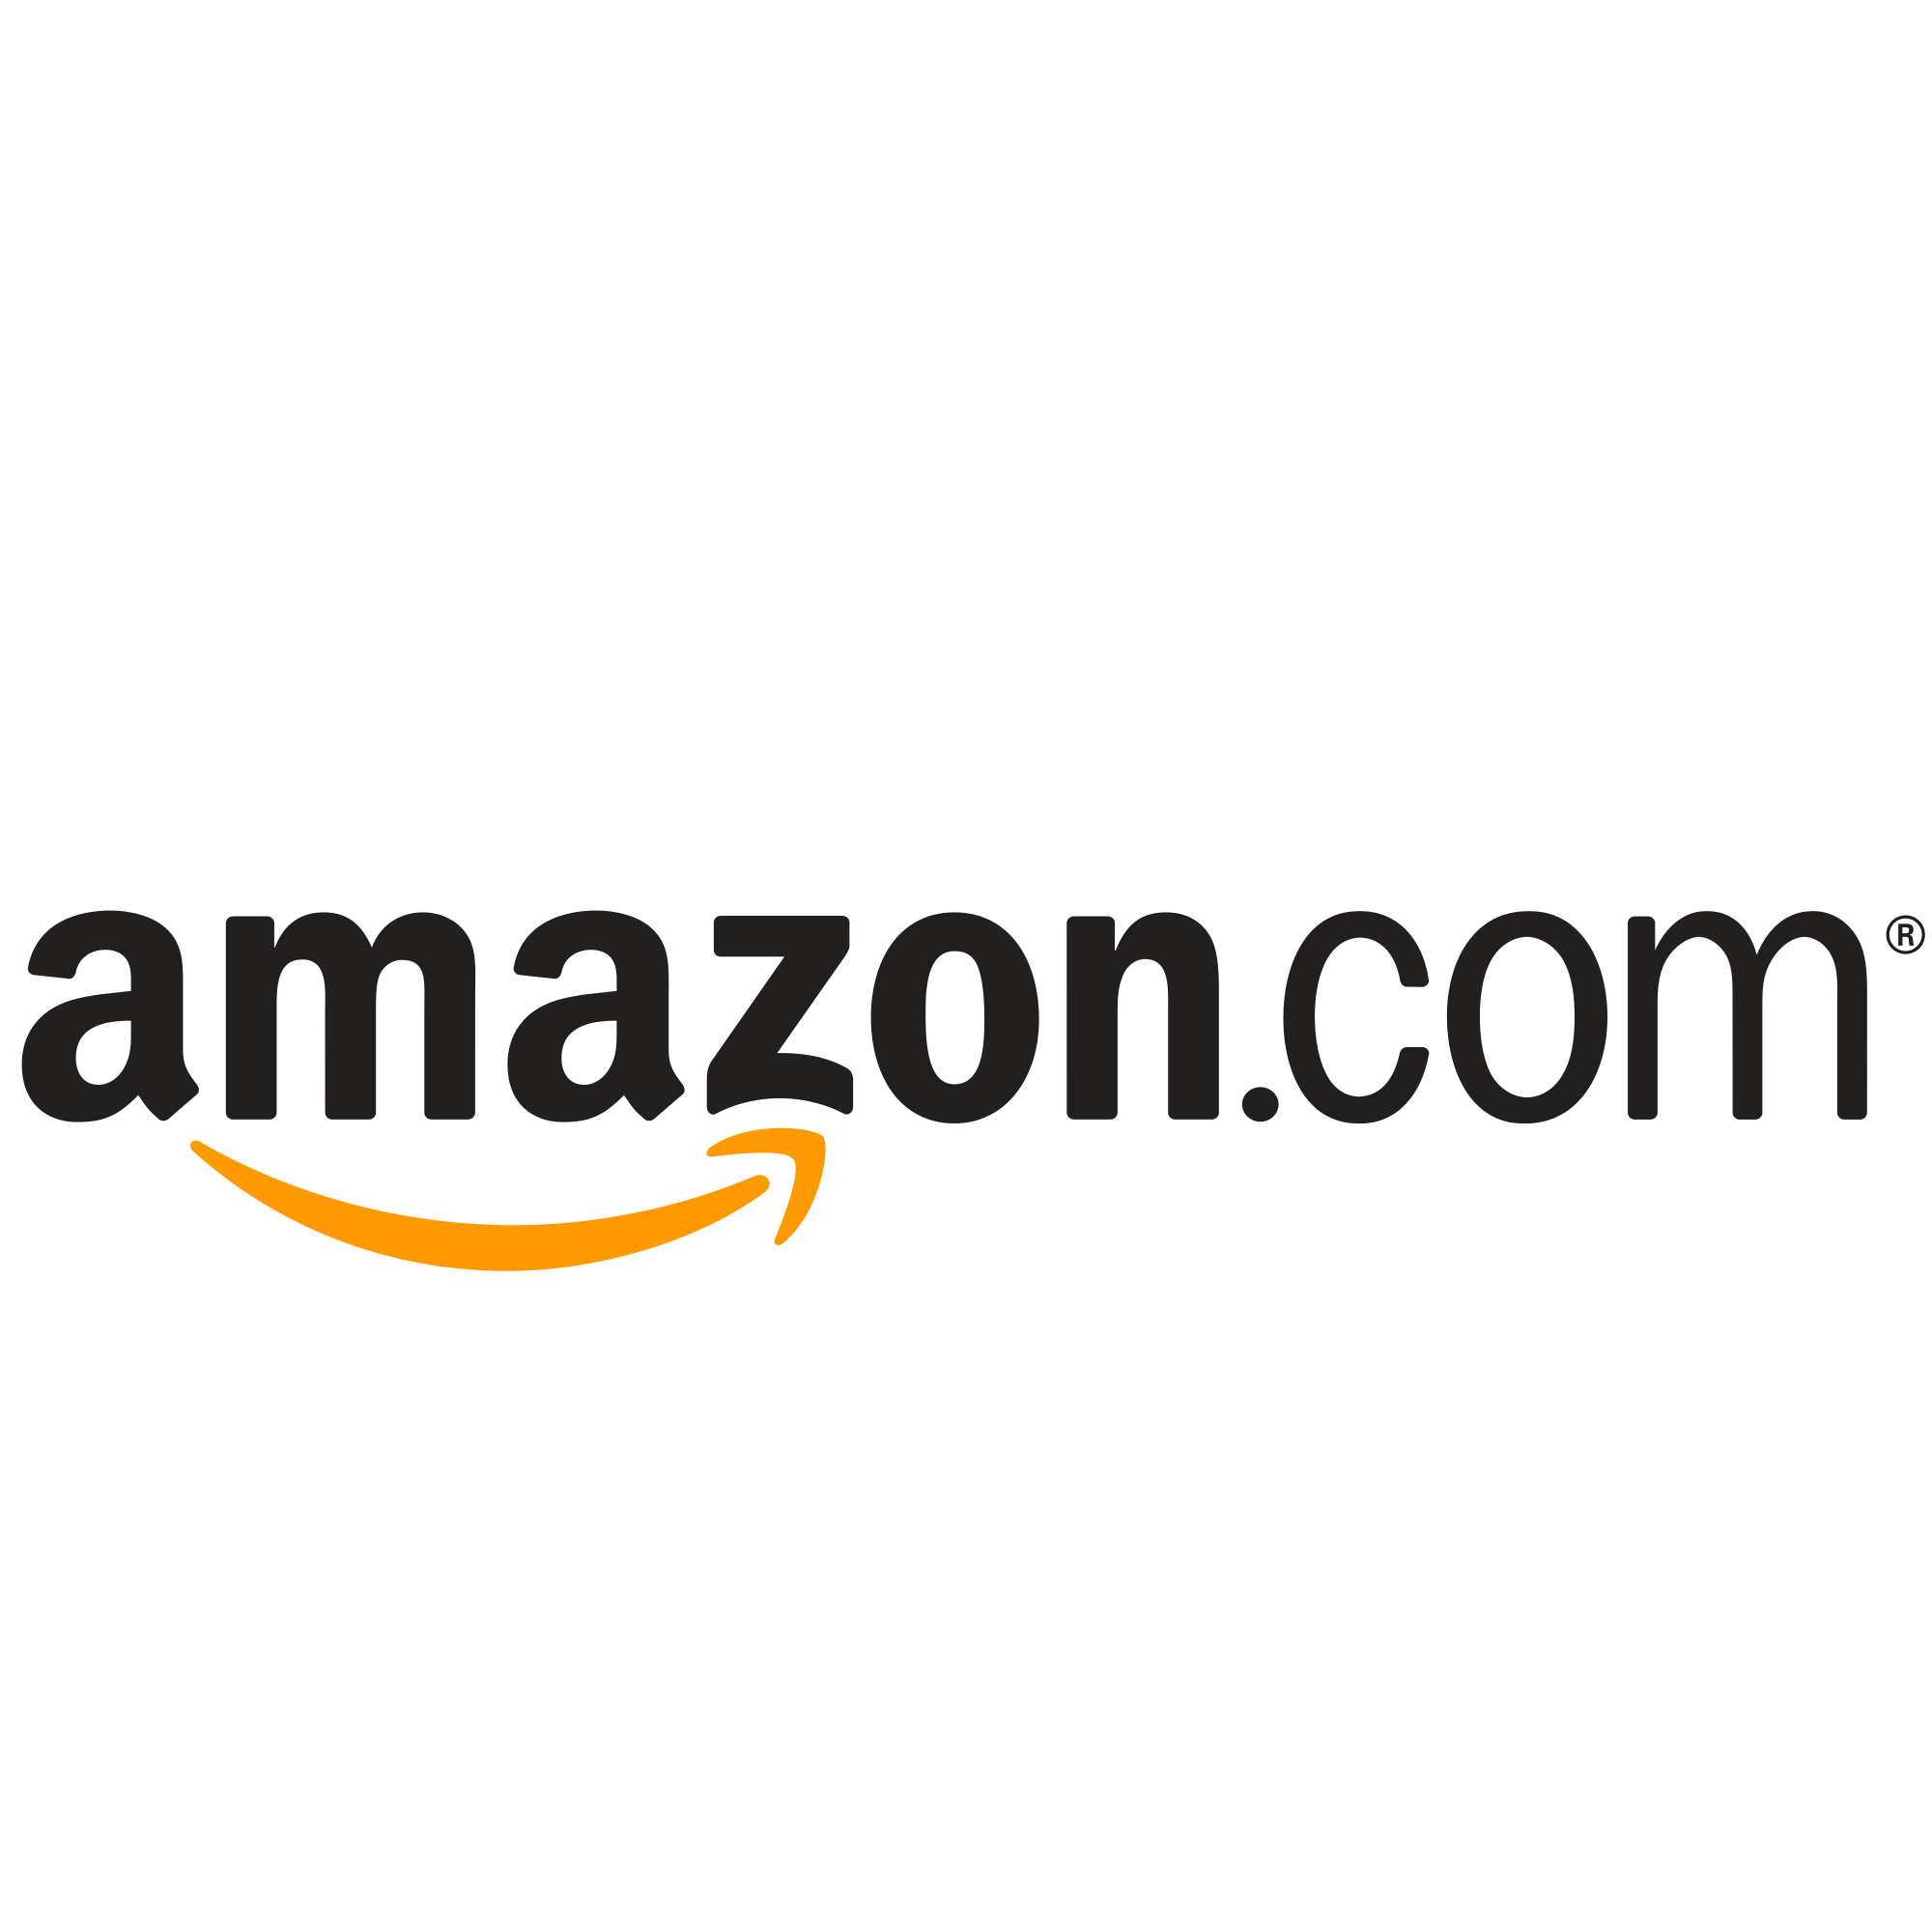 Amazon.com Logo - Amazon.com LOGO | Building Successful Online Business